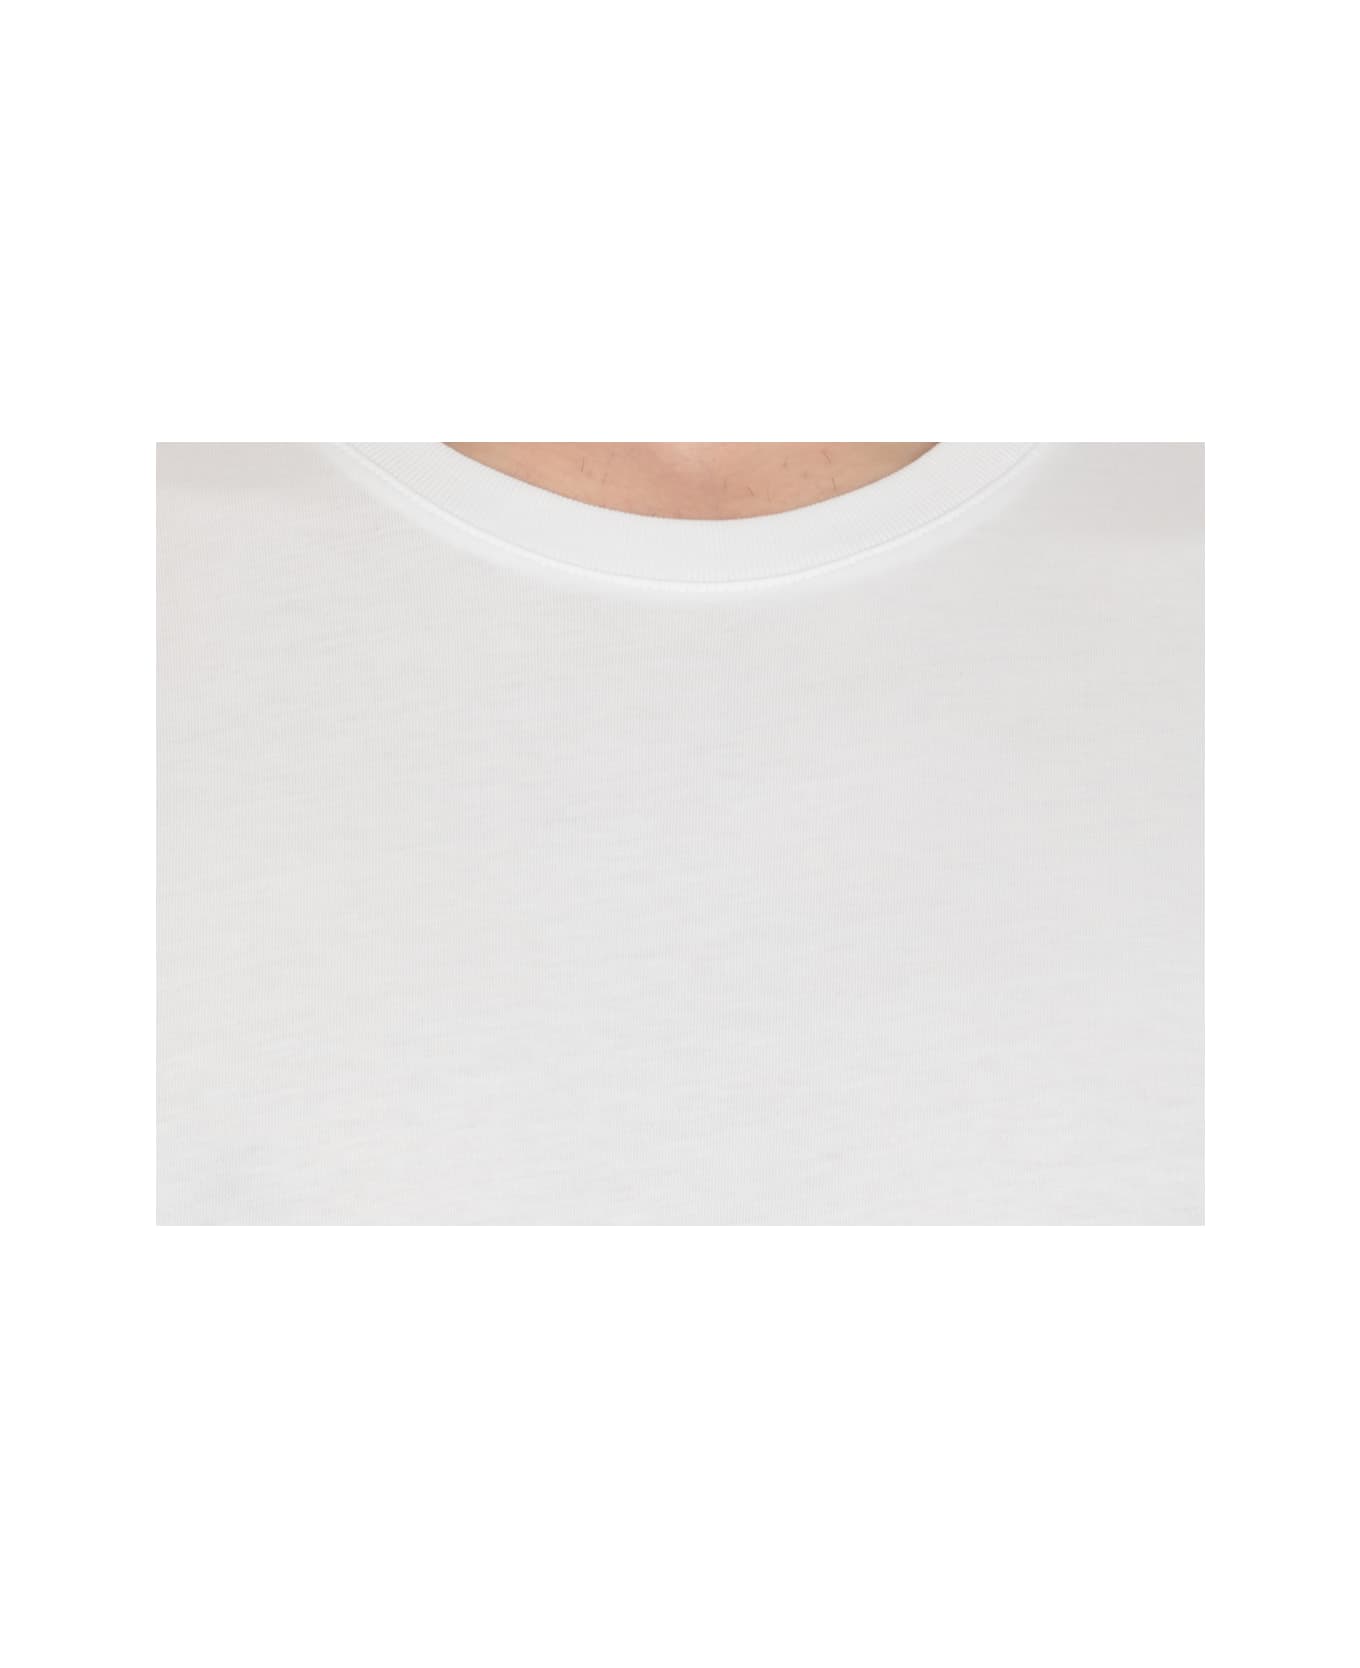 Fay Logoed T-shirt - White